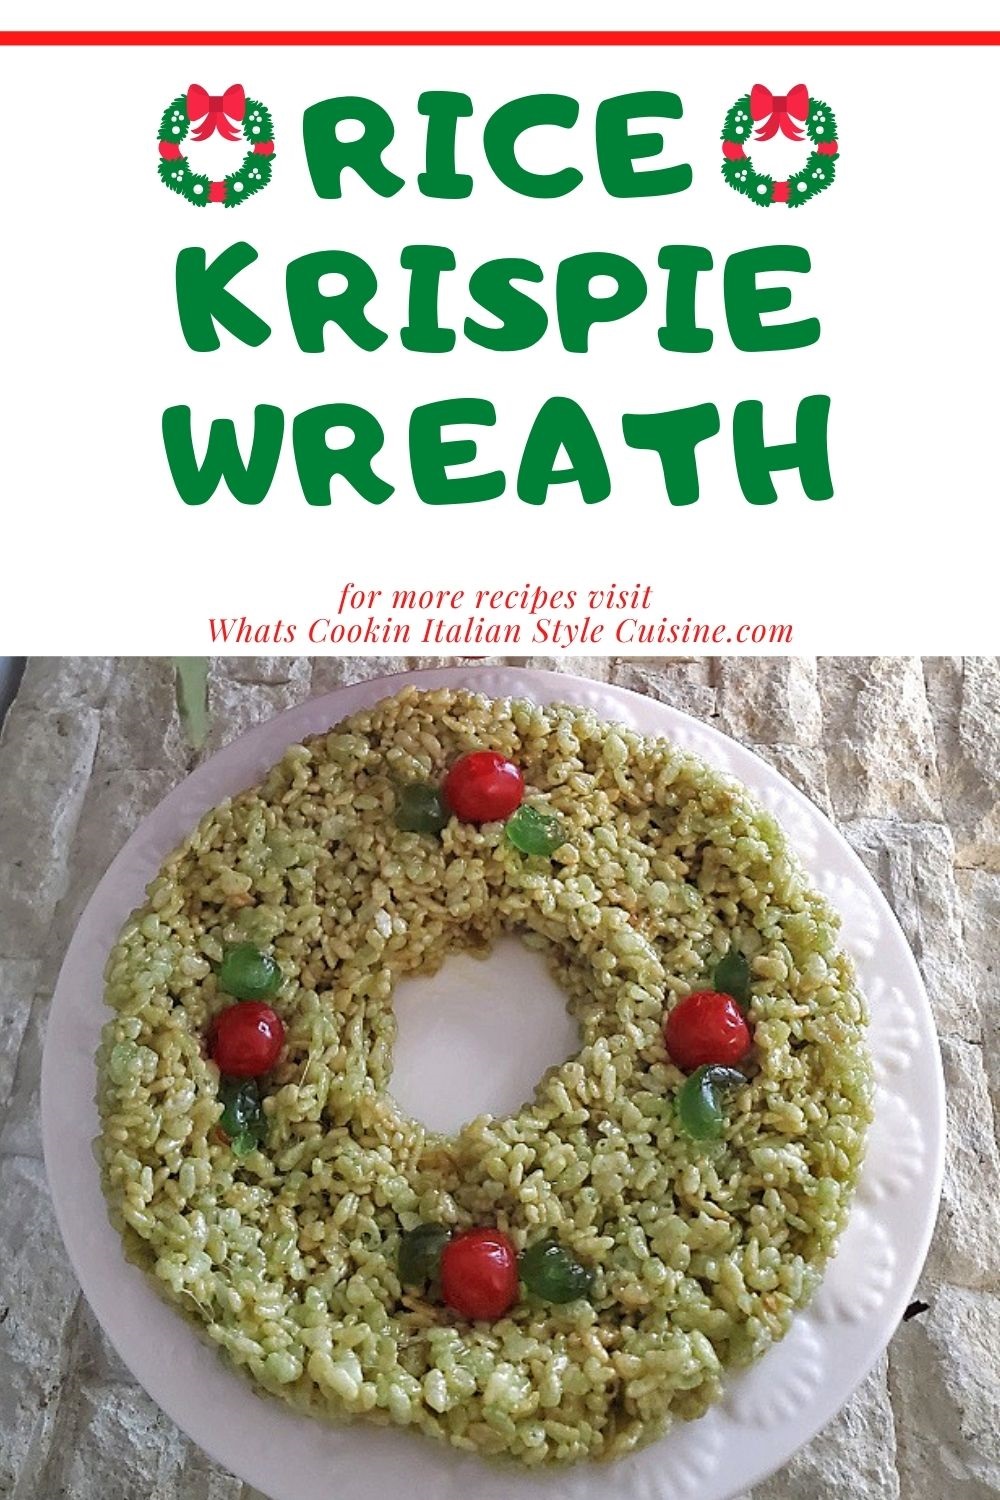 Grinch and Wreath Rice Krispie Treats